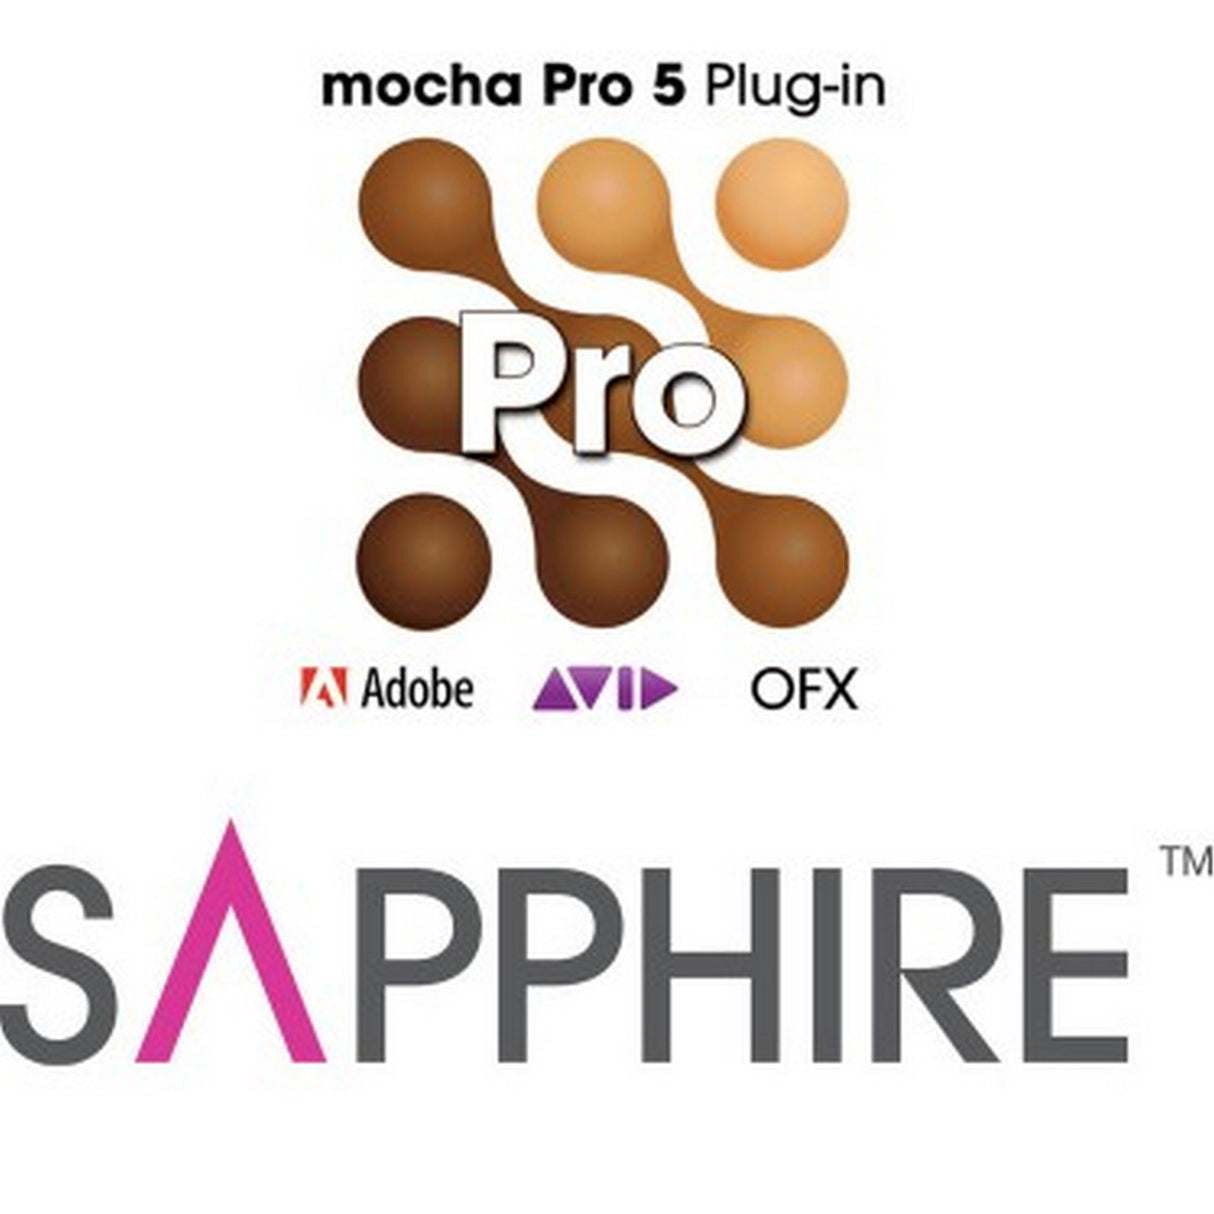 GenArts Sapphire 10 Boris FX Continuum Complete 10 mocha Pro 5 Bundle | Video Software Adobe Avid and OFX